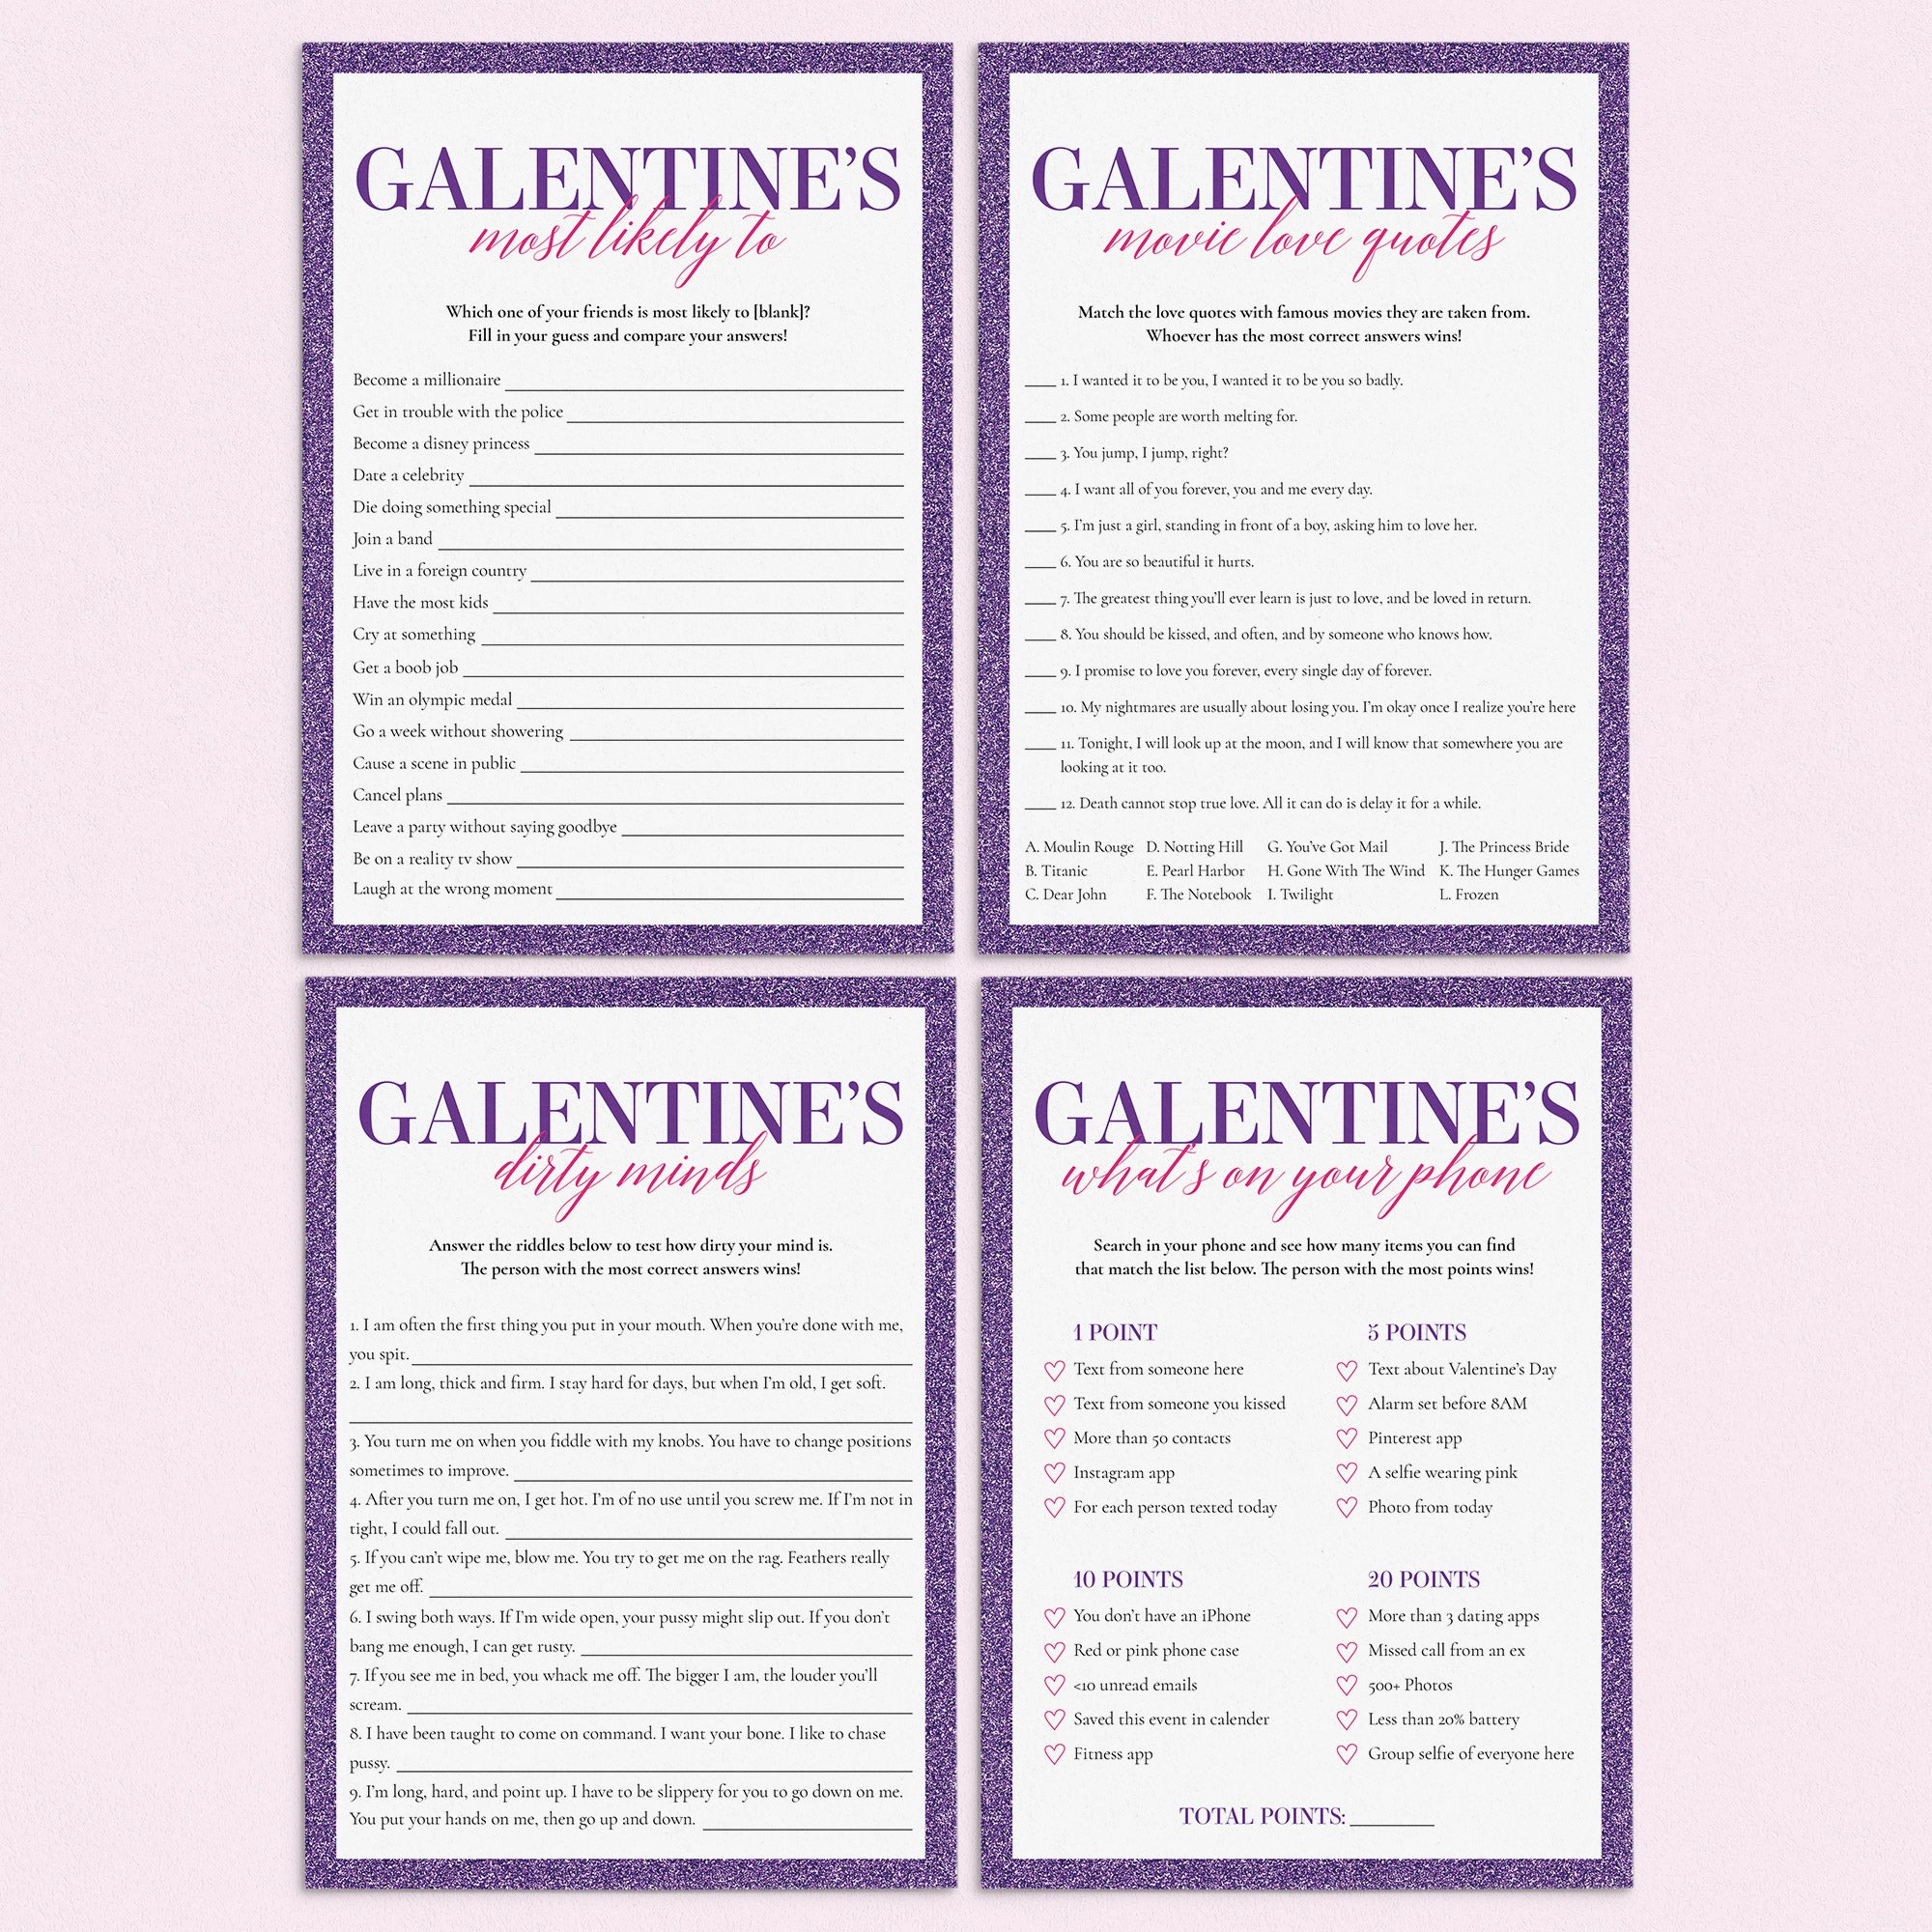 Printable Galentines Games Bundle Digital Download by LittleSizzle